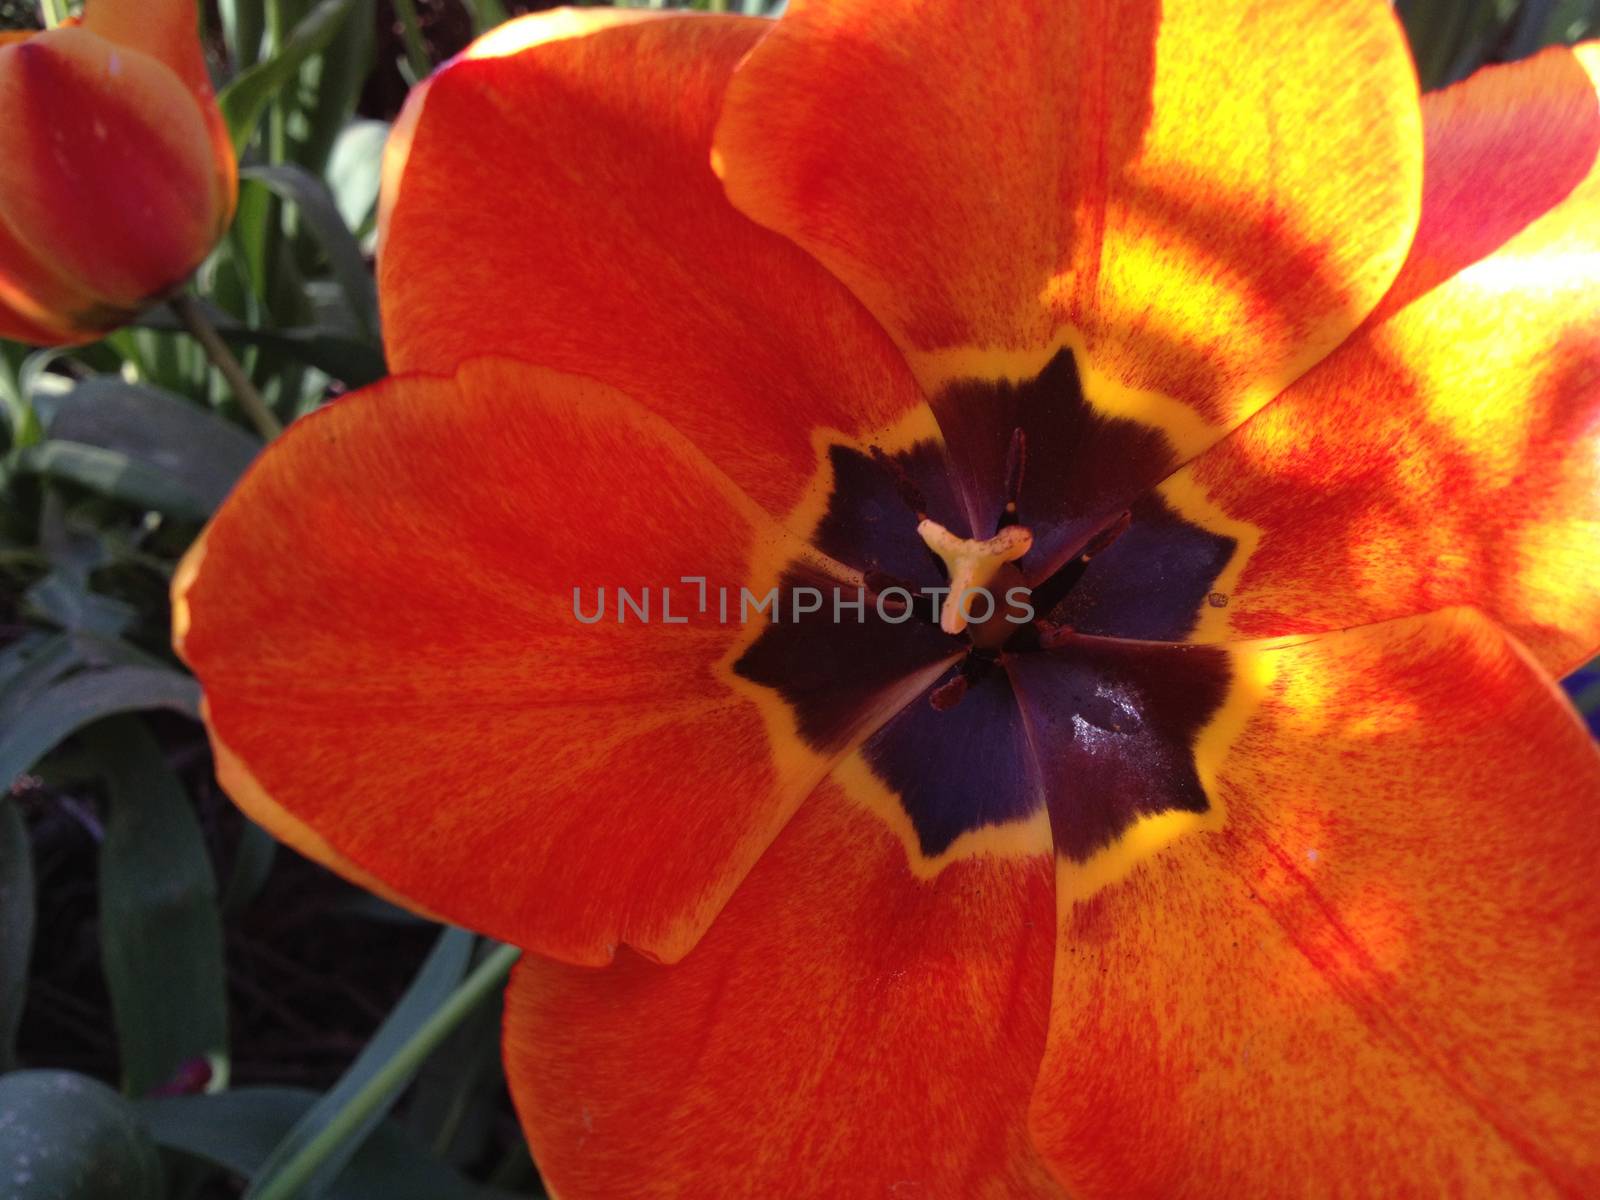 Orange and yellow tulip fully opened revealing a dark brownish center 